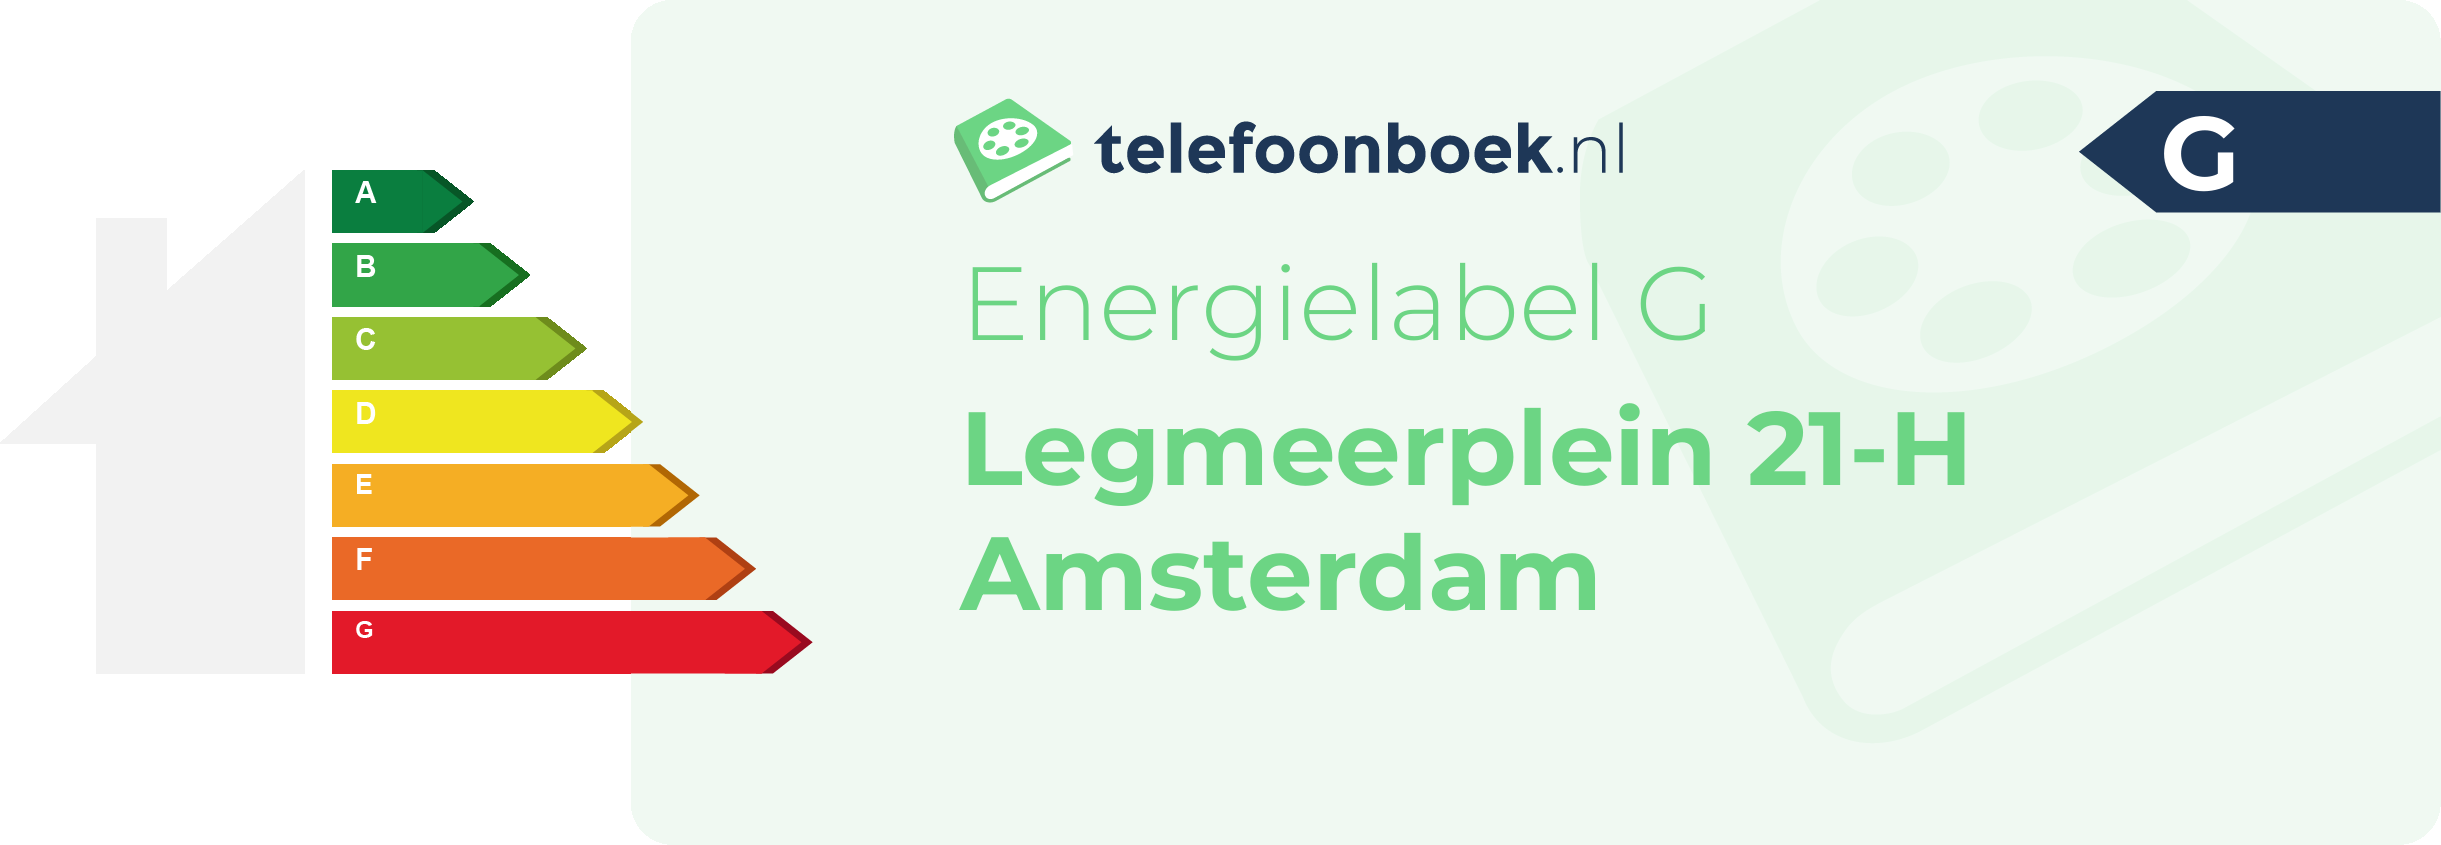 Energielabel Legmeerplein 21-H Amsterdam